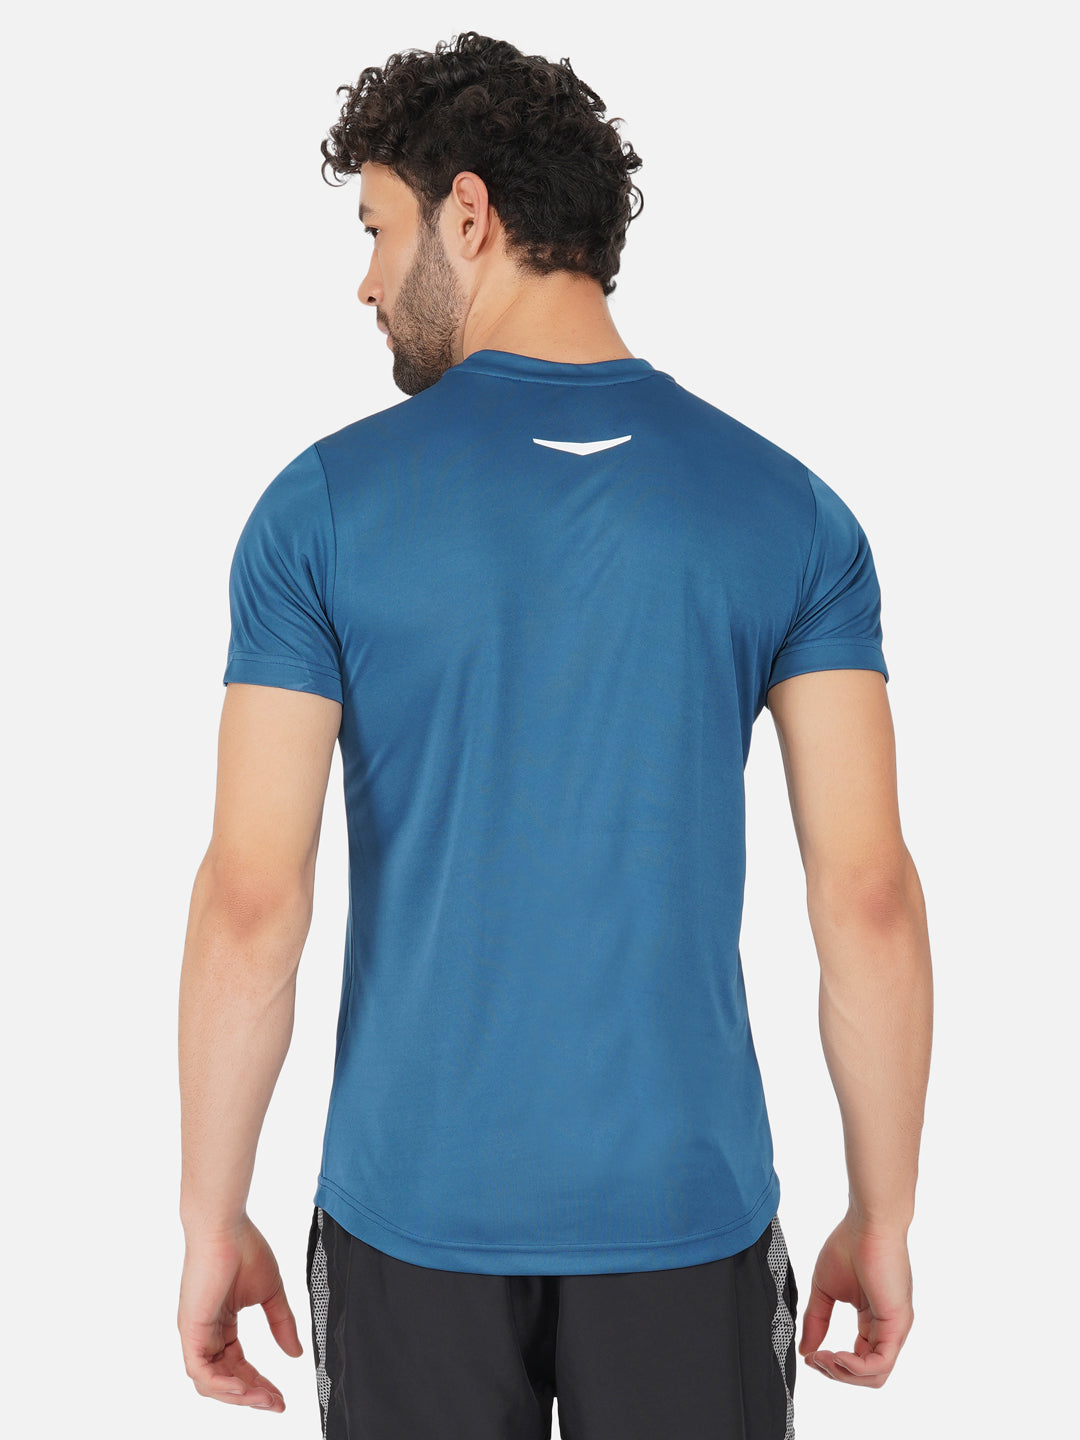 DriSOFT T Shirt Denim Blue Men RWM2016